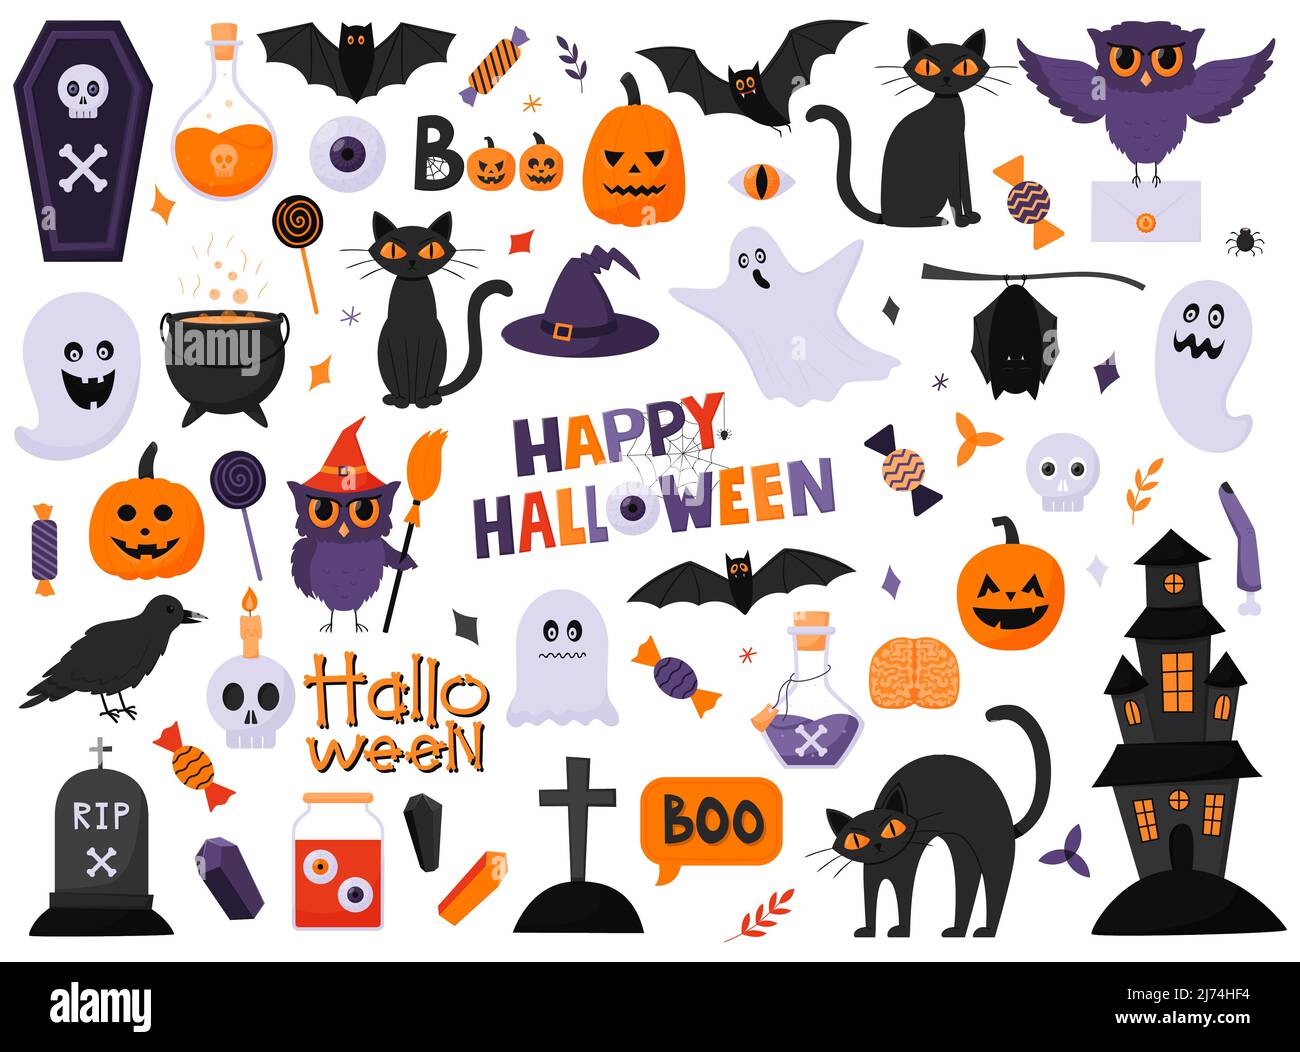 A set of design elements for Halloween. Pumpkins, owls, cats, ghosts, hat, poison, bats. Purple, orange colors. Flat cartoon vector illustrations isol Stock Vector